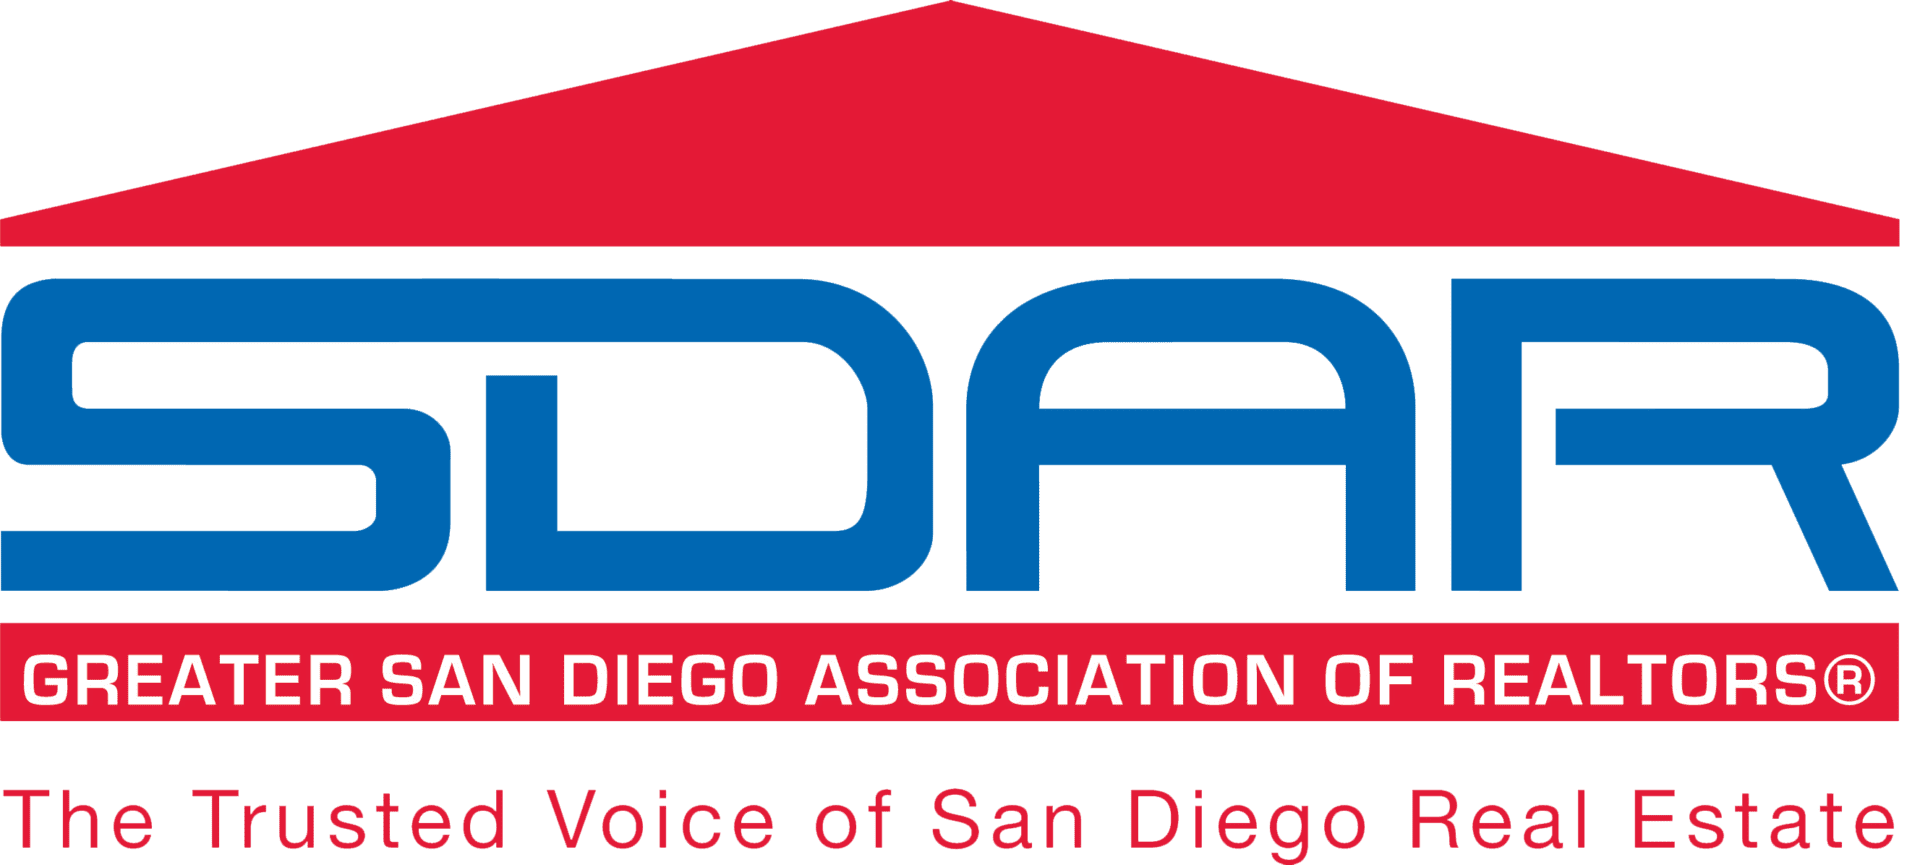 Greater San Diego Association of Realtors logo